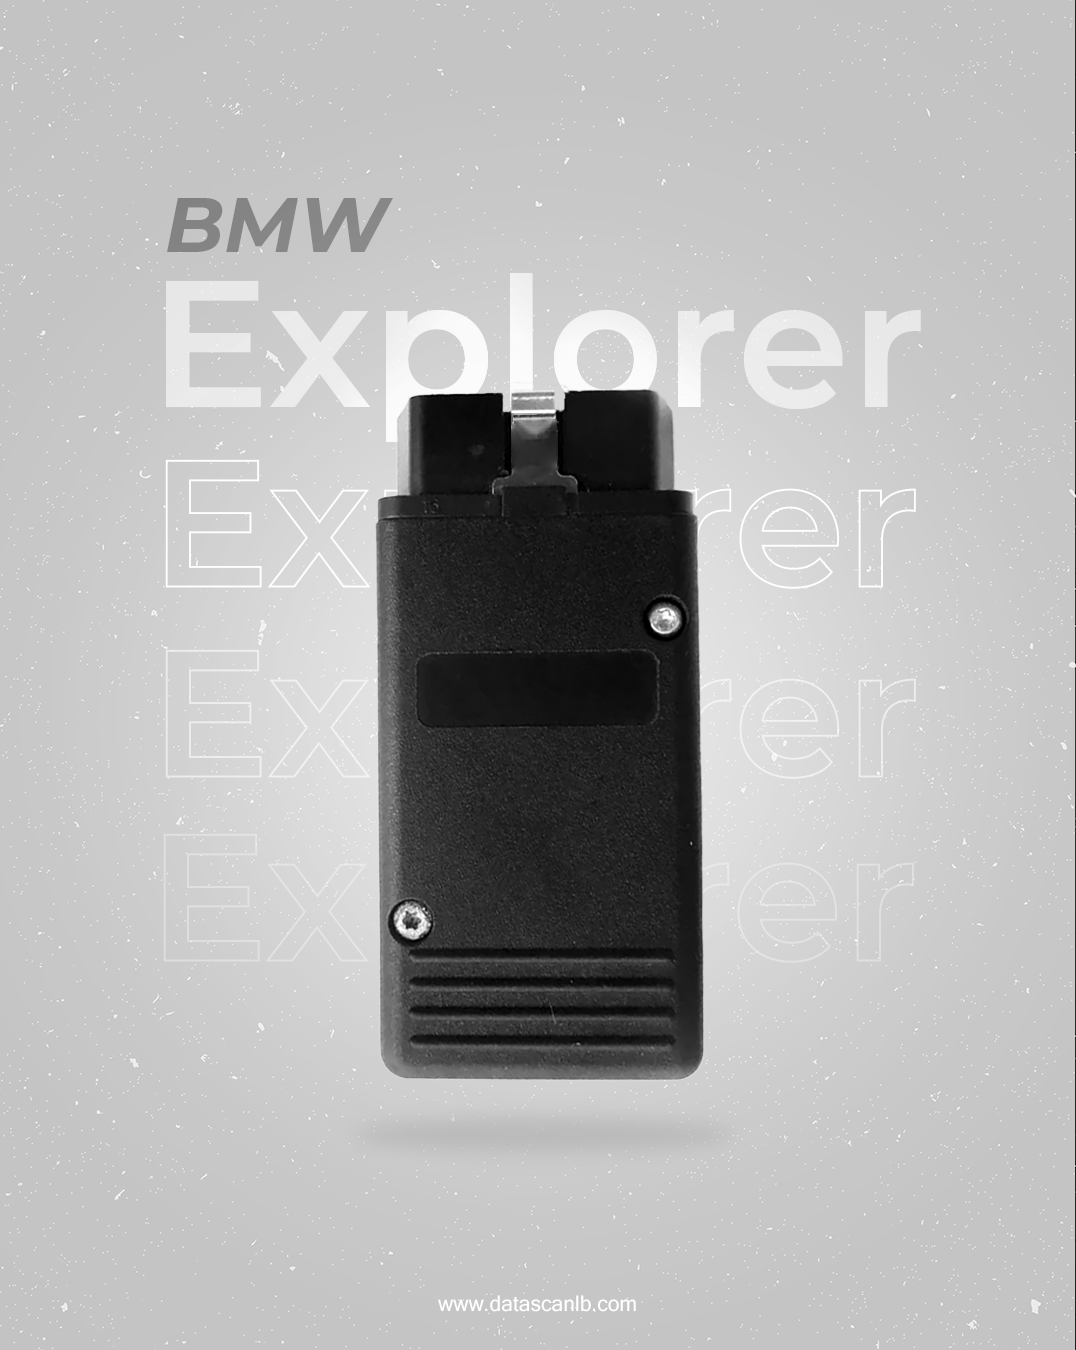 BMW Explorer